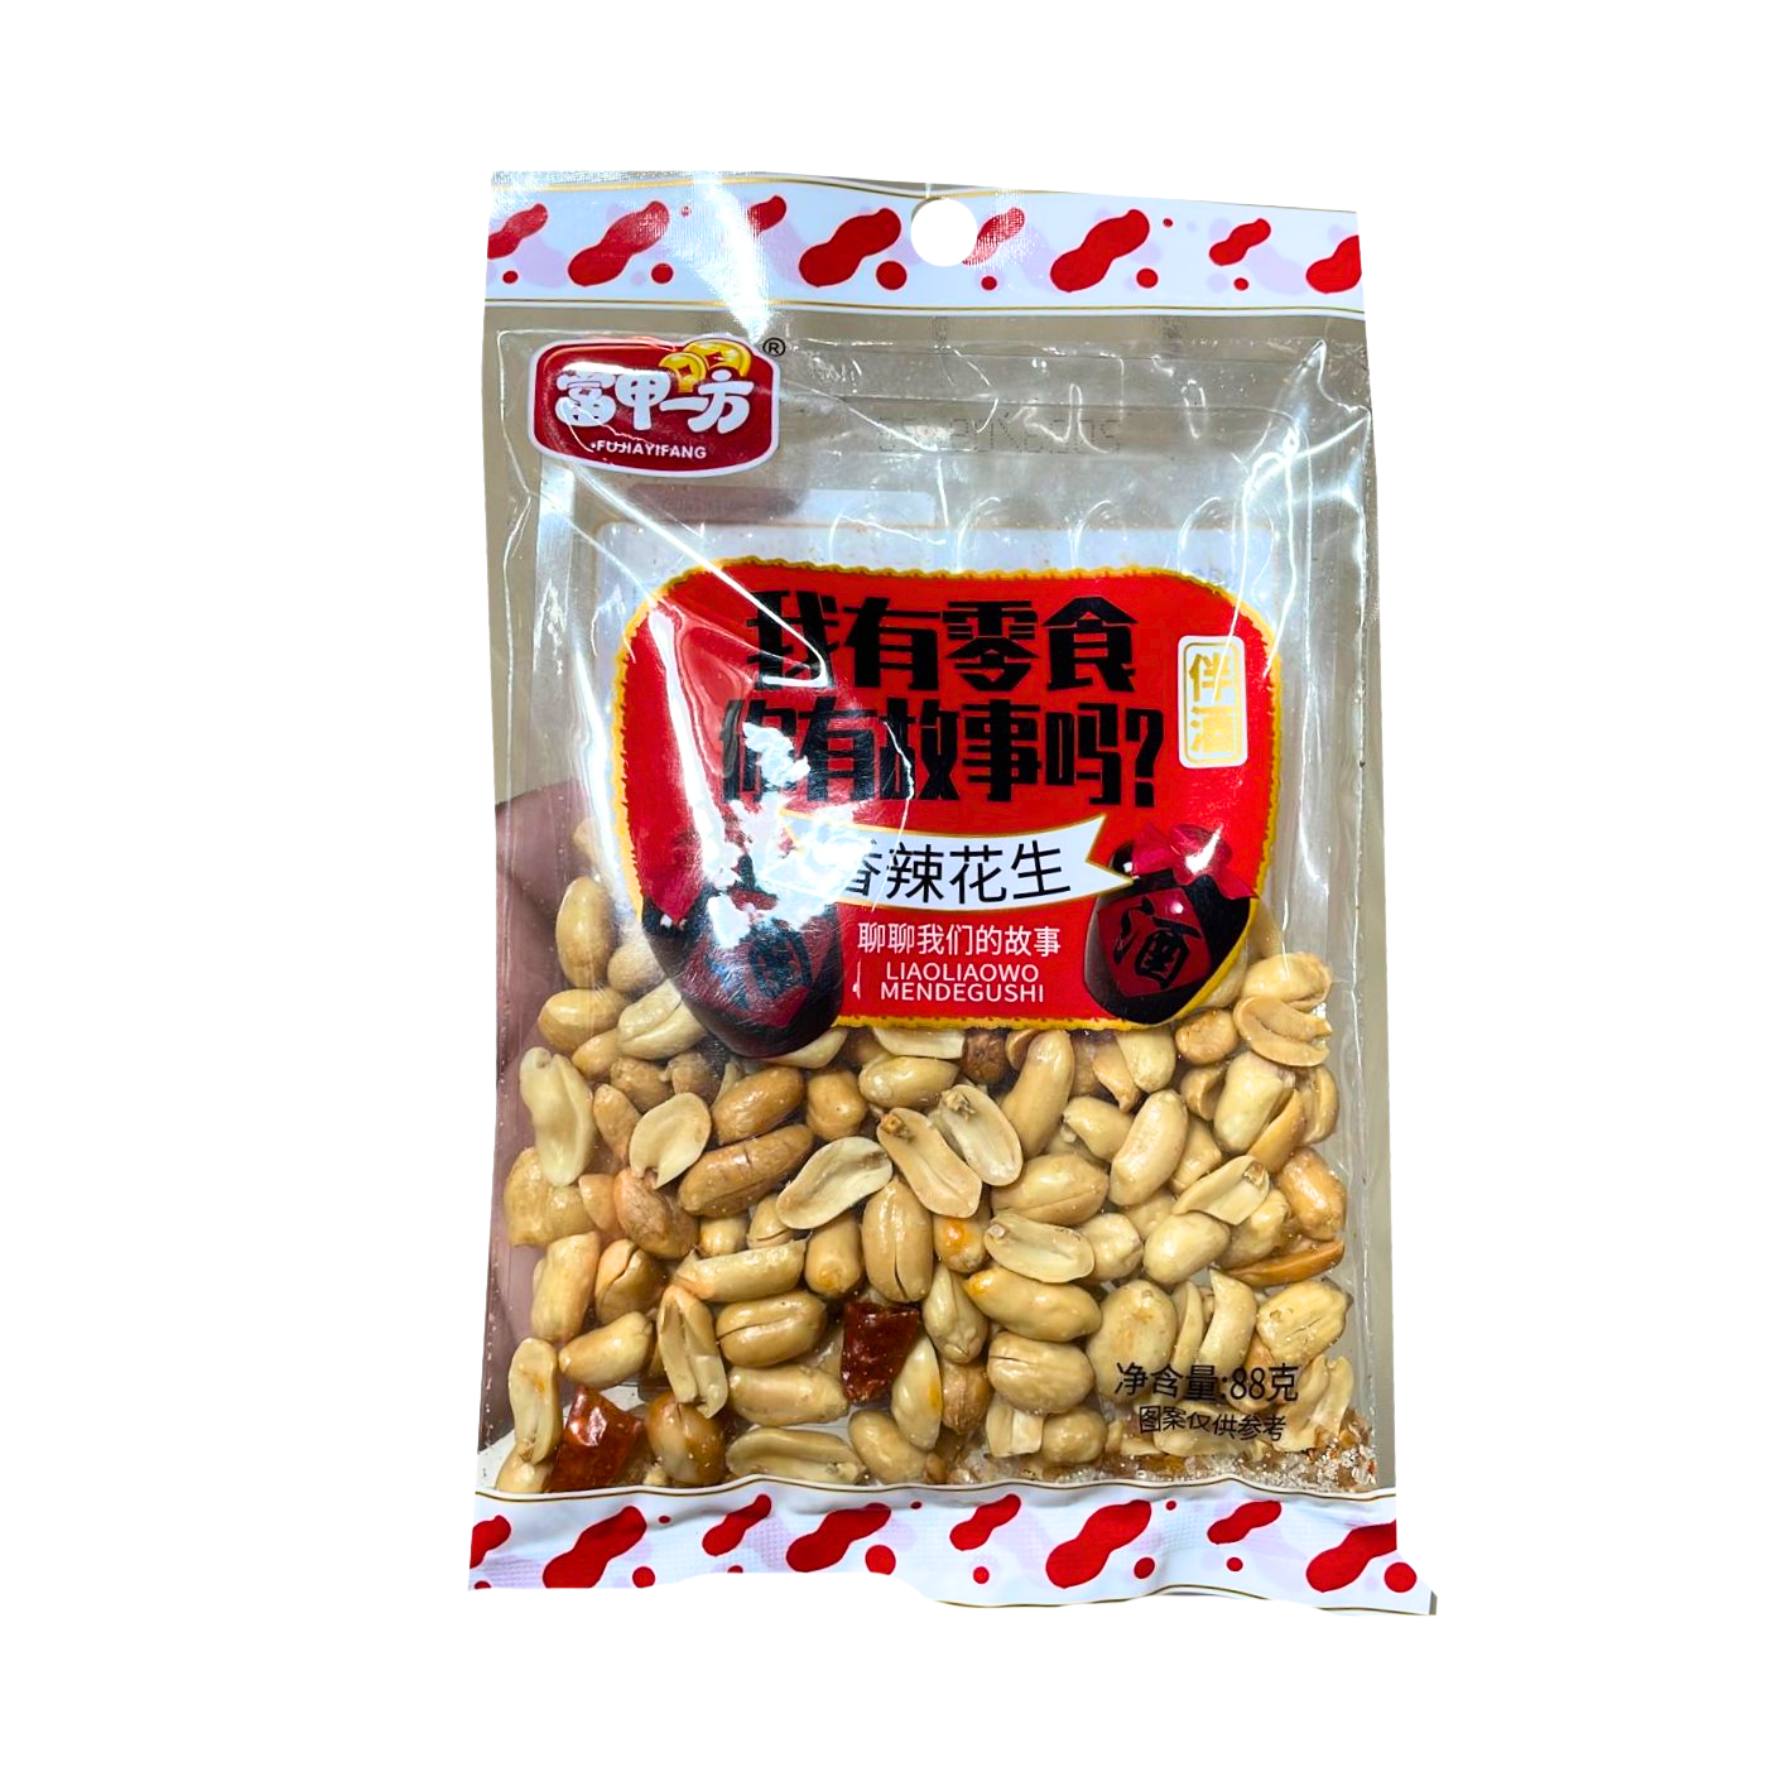 Amendoim apimentado - Fujiayifang 88g